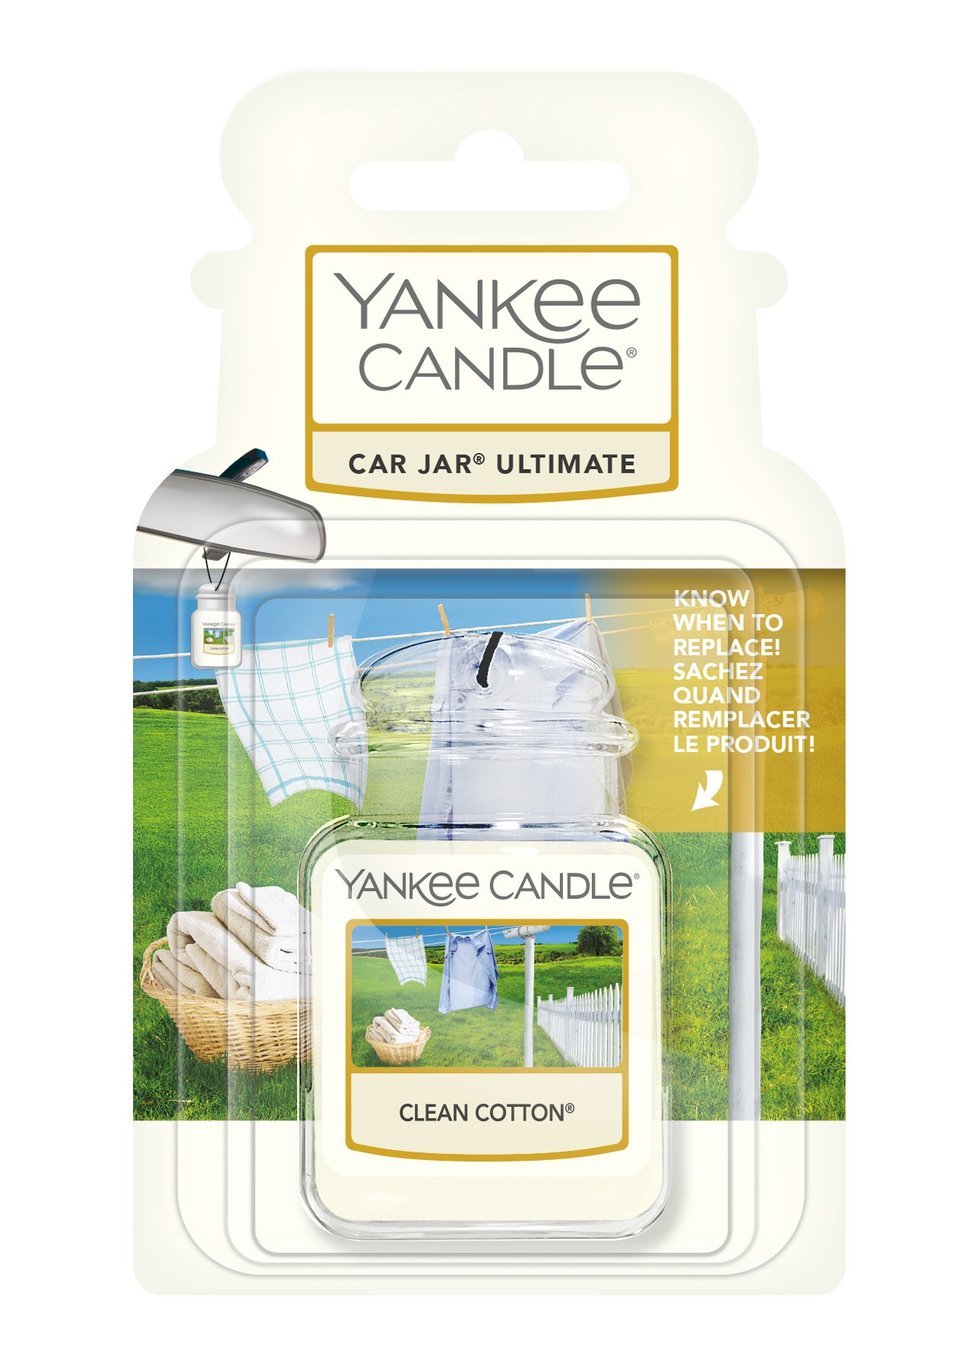 Pachnący dom, Yankee Candle, Zapach do samochodu Car Jar ULTIMATE Yankee  Candle Clean Cotton Car Jar ULTIMATE Yankee Candle CLEAN COTTON